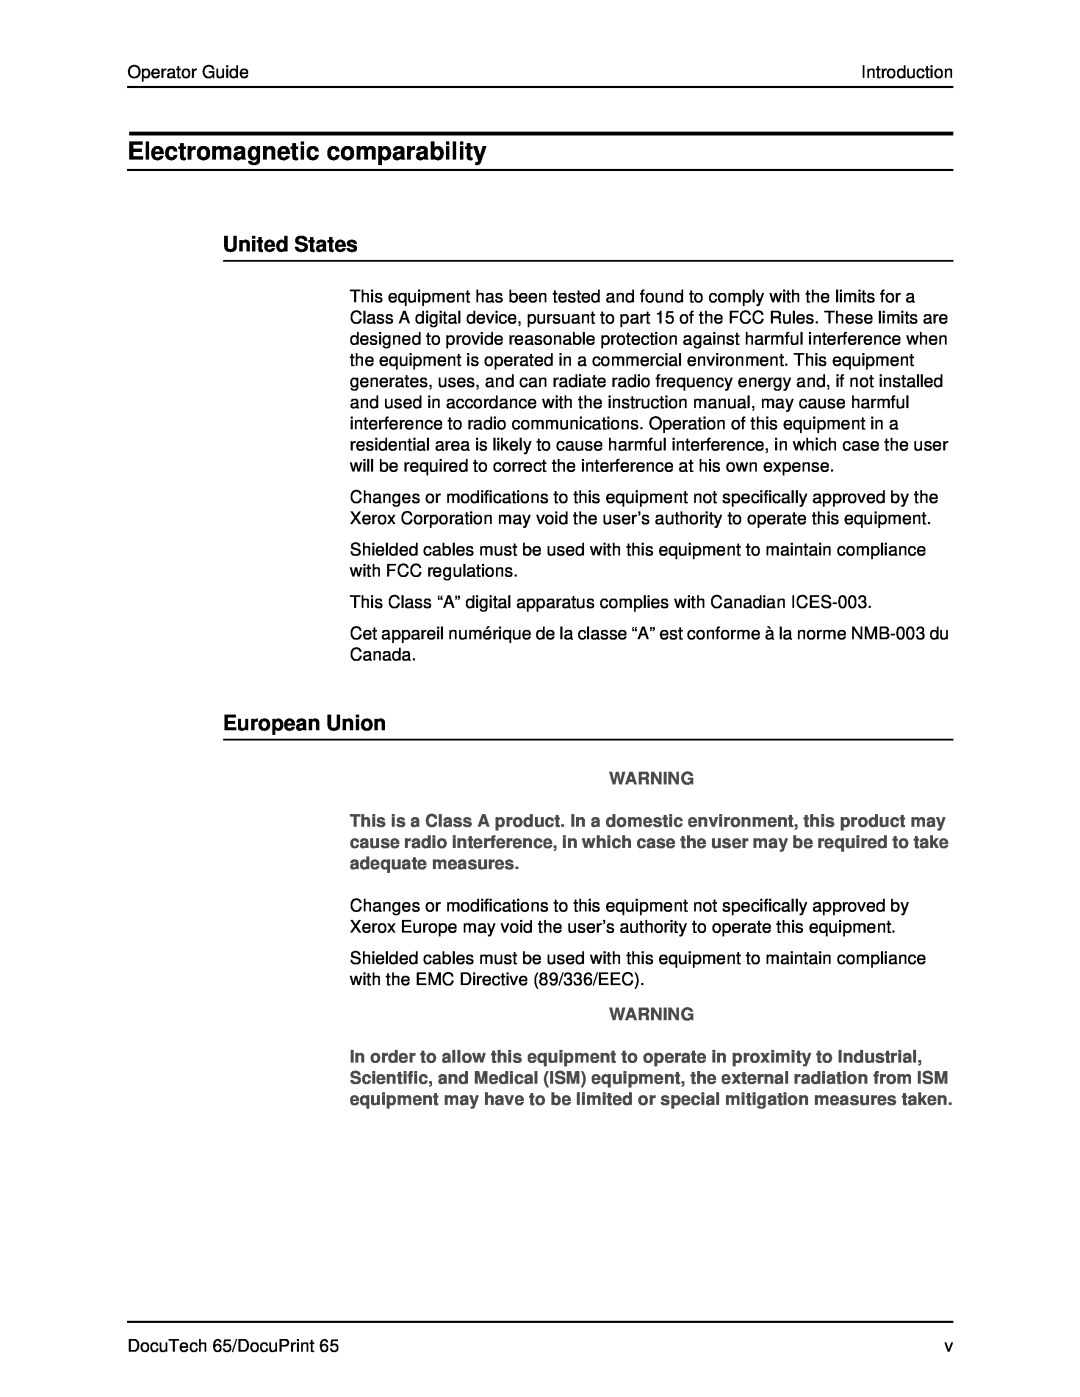 Xerox DOCUTECH 65 manual Electromagnetic comparability, United States, European Union 